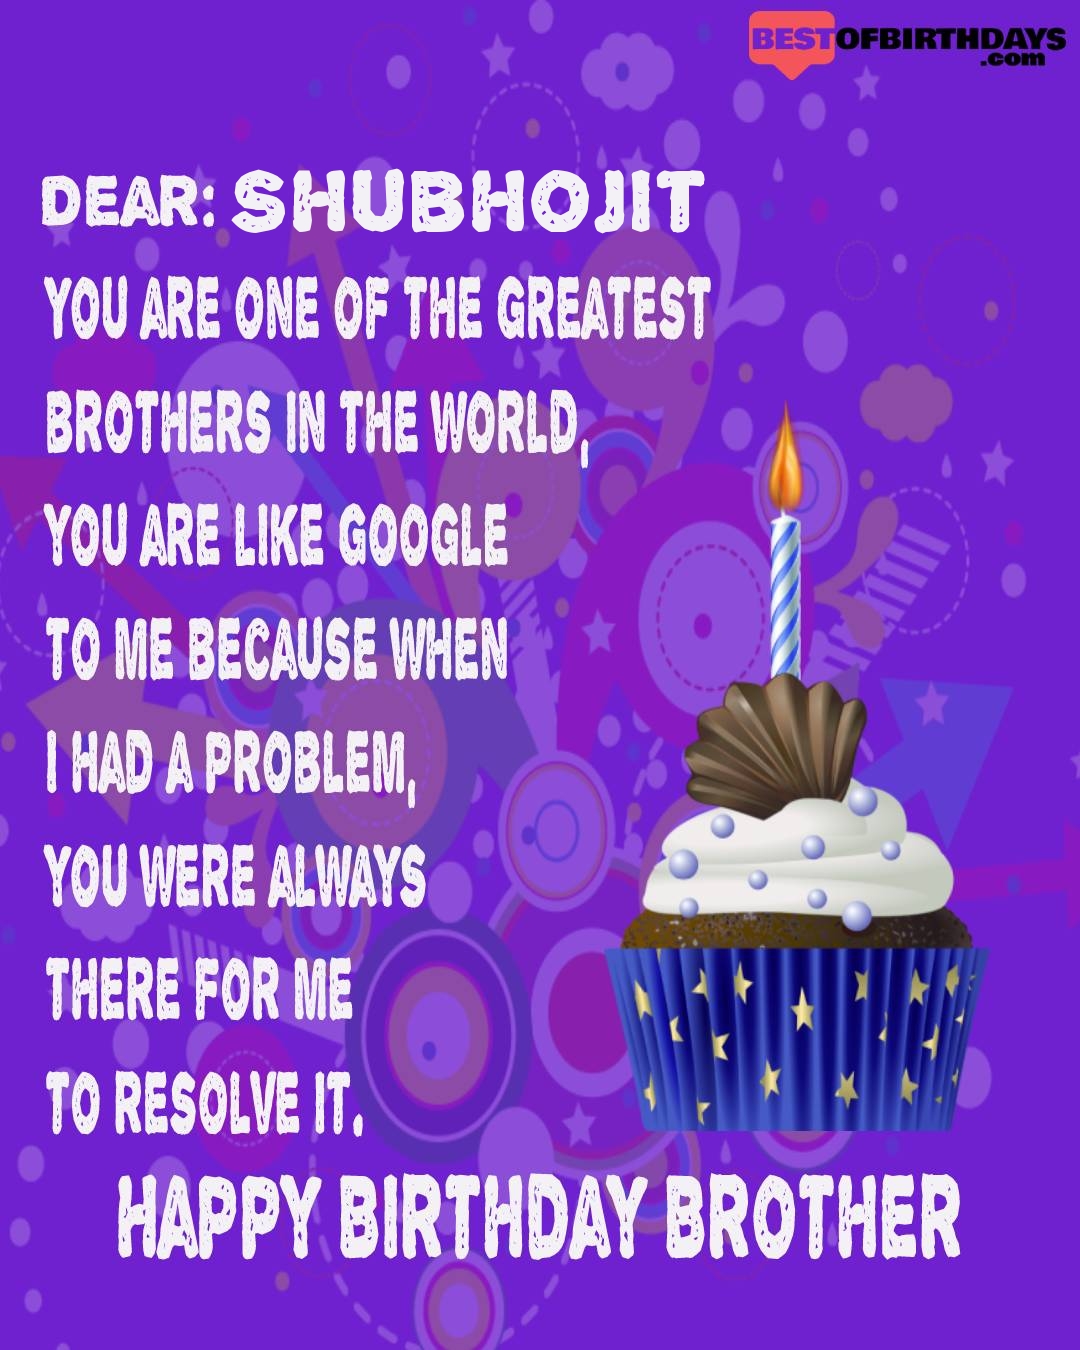 Happy birthday shubhojit bhai brother bro